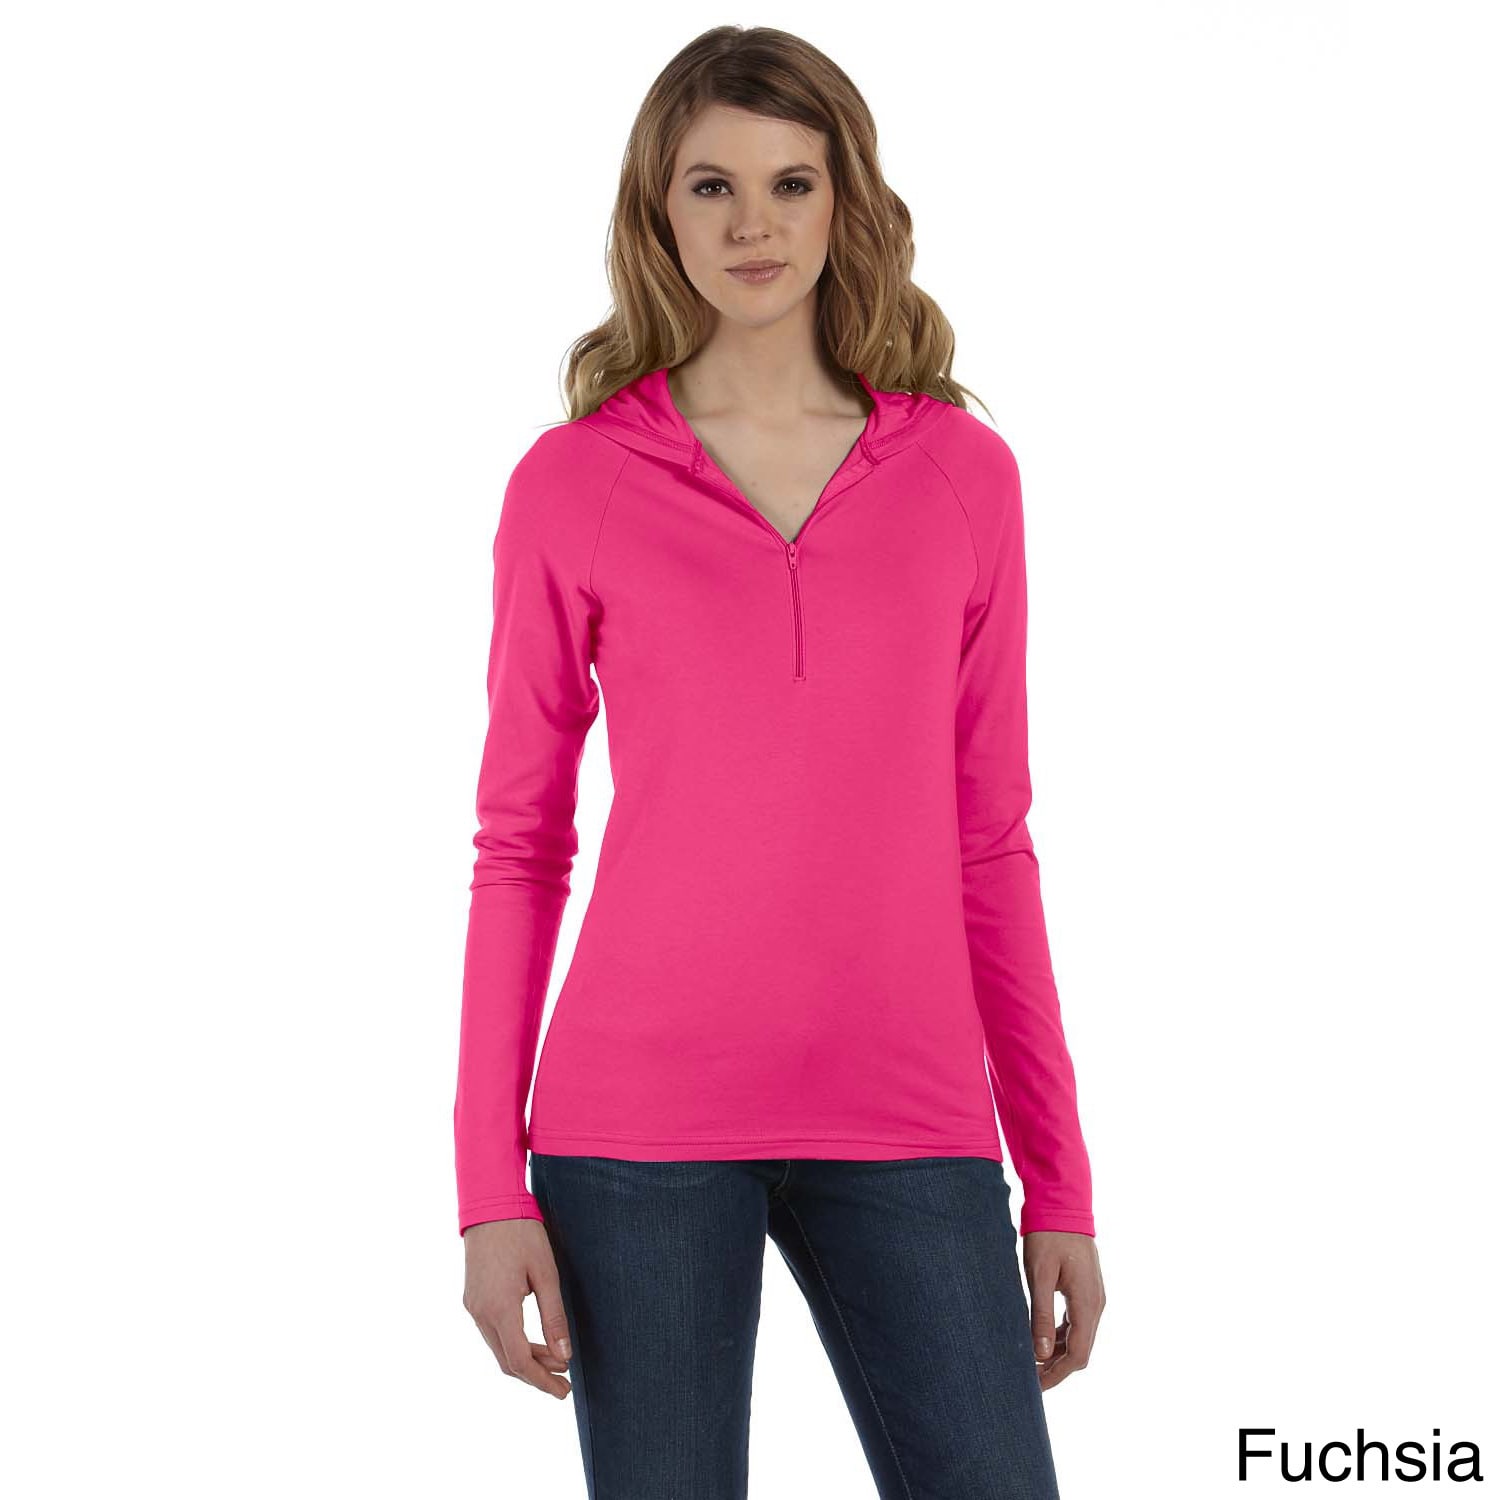 Bella Womens Cotton/ Spandex Half zip Hooded Pullover Sweater Black Size L (12  14)